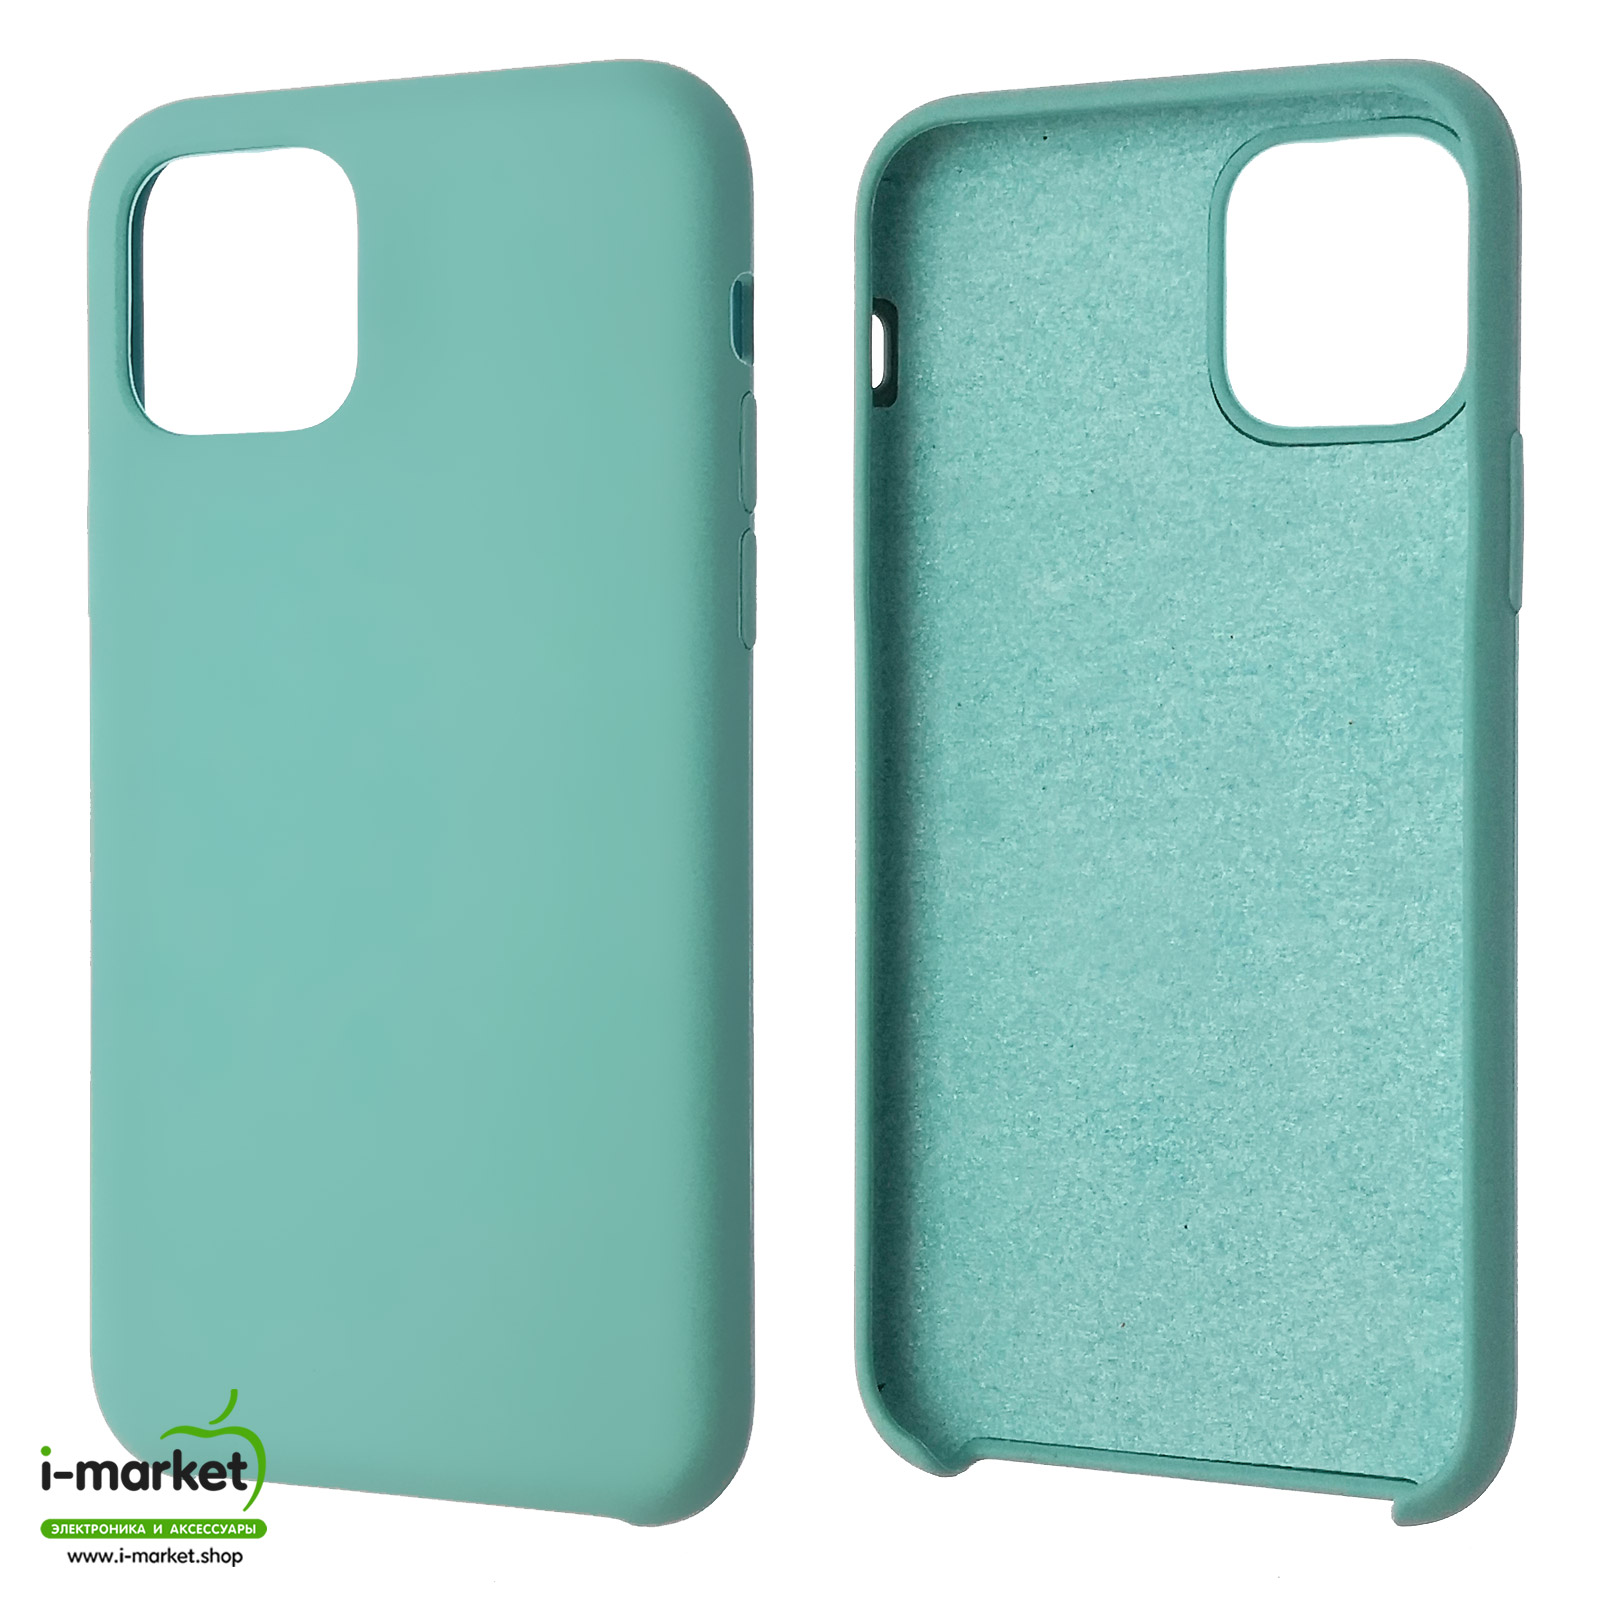 Чехол накладка Silicon Case для APPLE iPhone 11 Pro, силикон, бархат, цвет светло бирюзовый